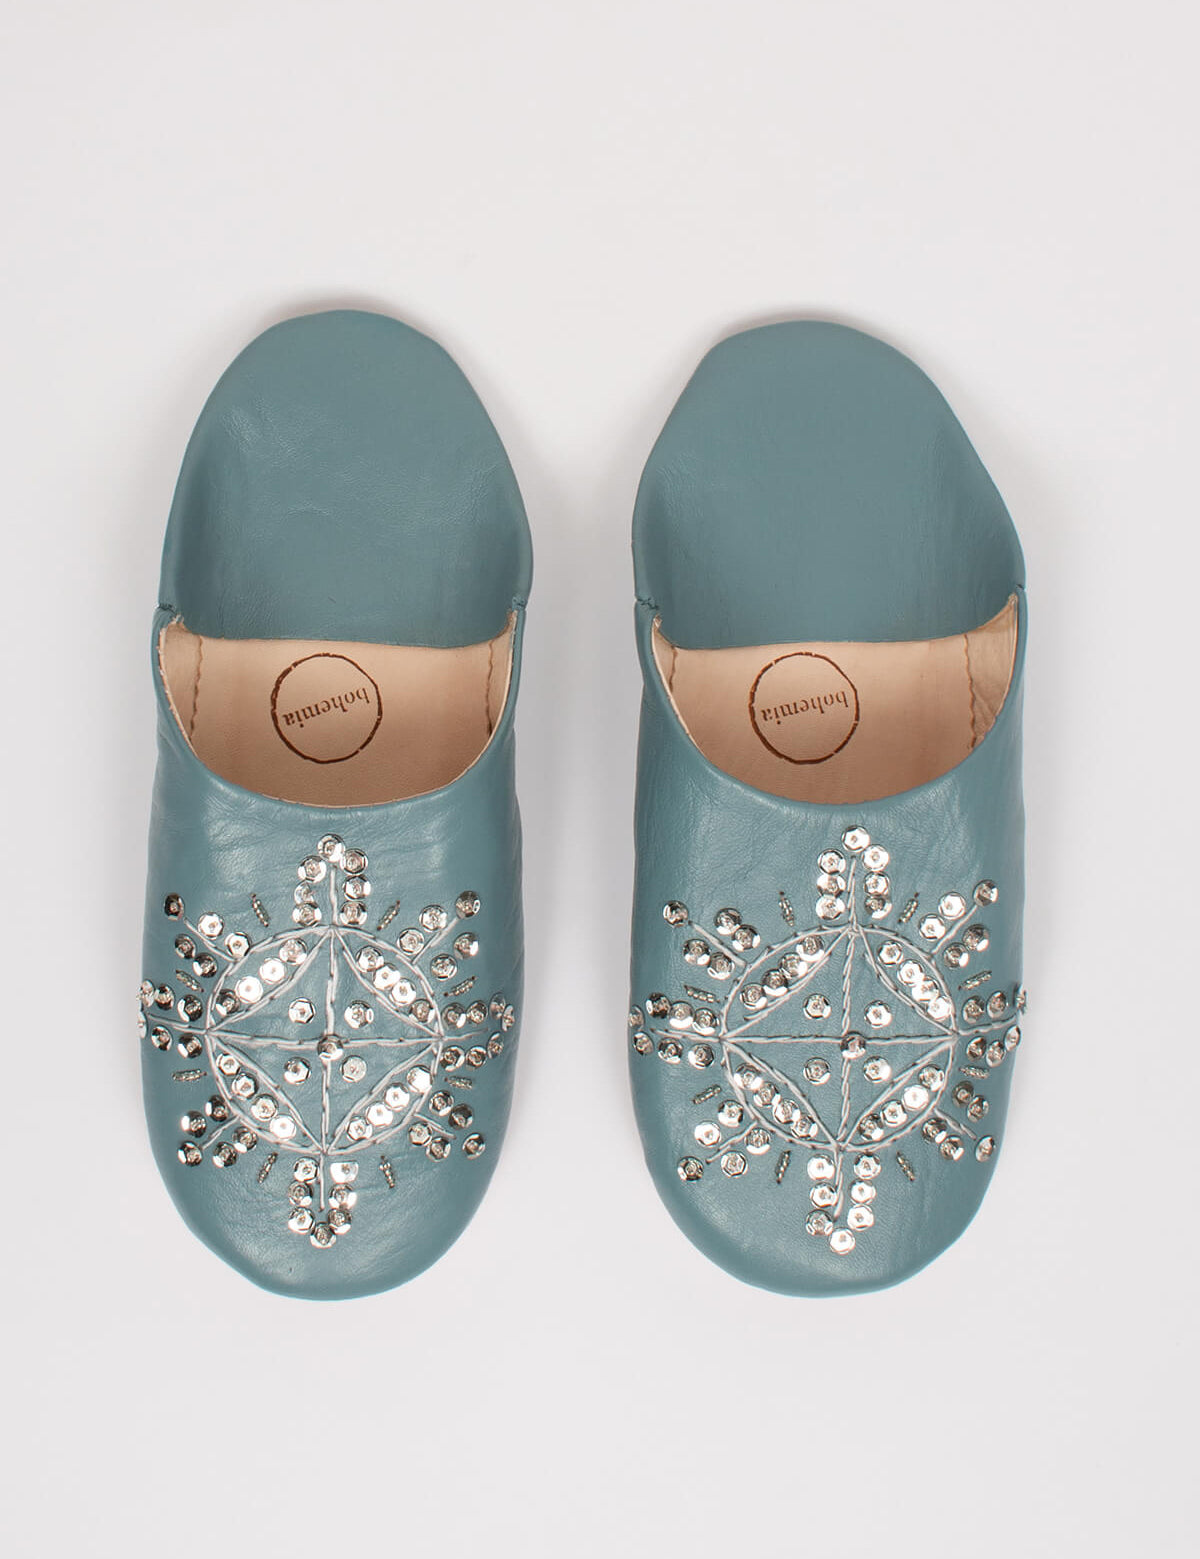 bohemia-design-babouche-sequin-slippers-slate-grey-2-edit_1ee7853c-c101-440a-bc9f-9bcf30b1c527.jpg